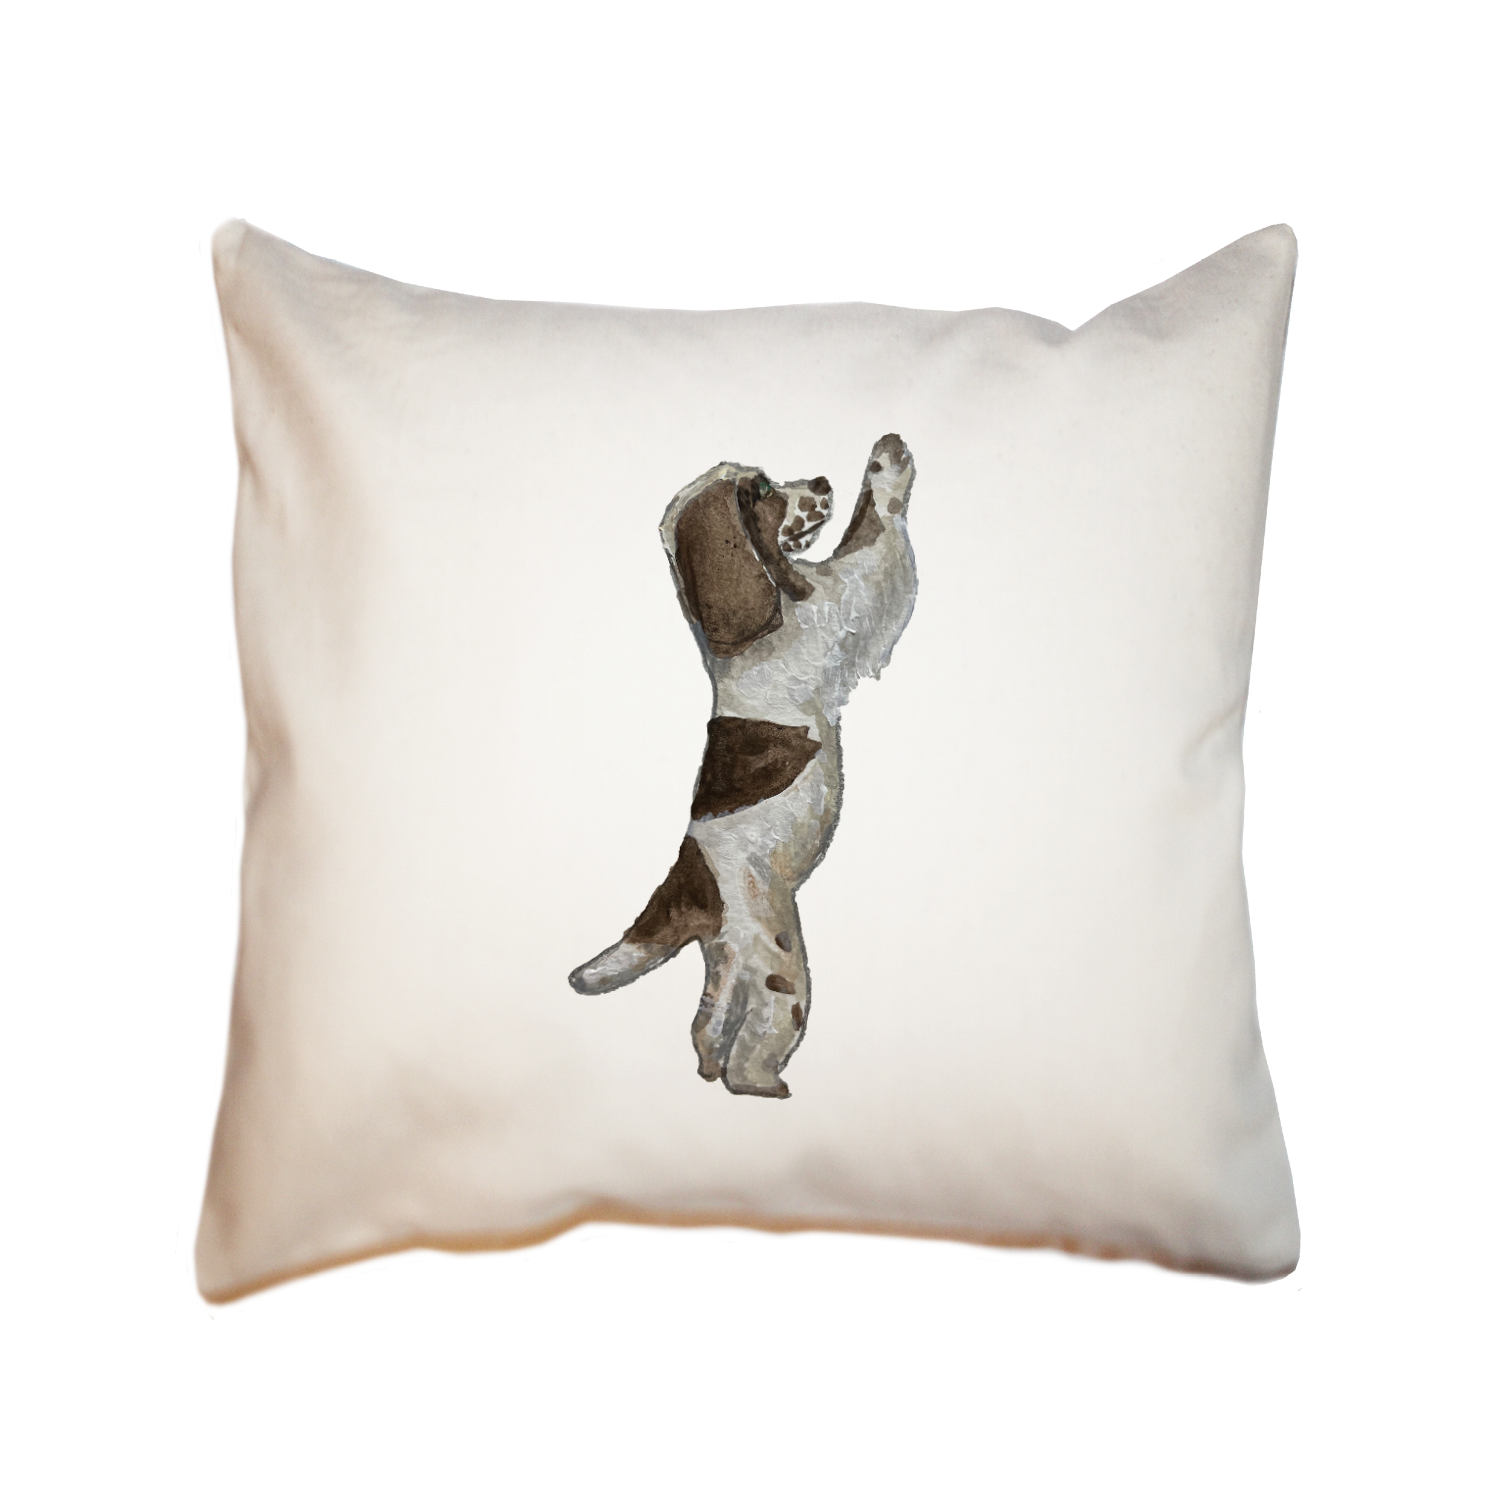 english cocker spaniel on hind legs square pillow